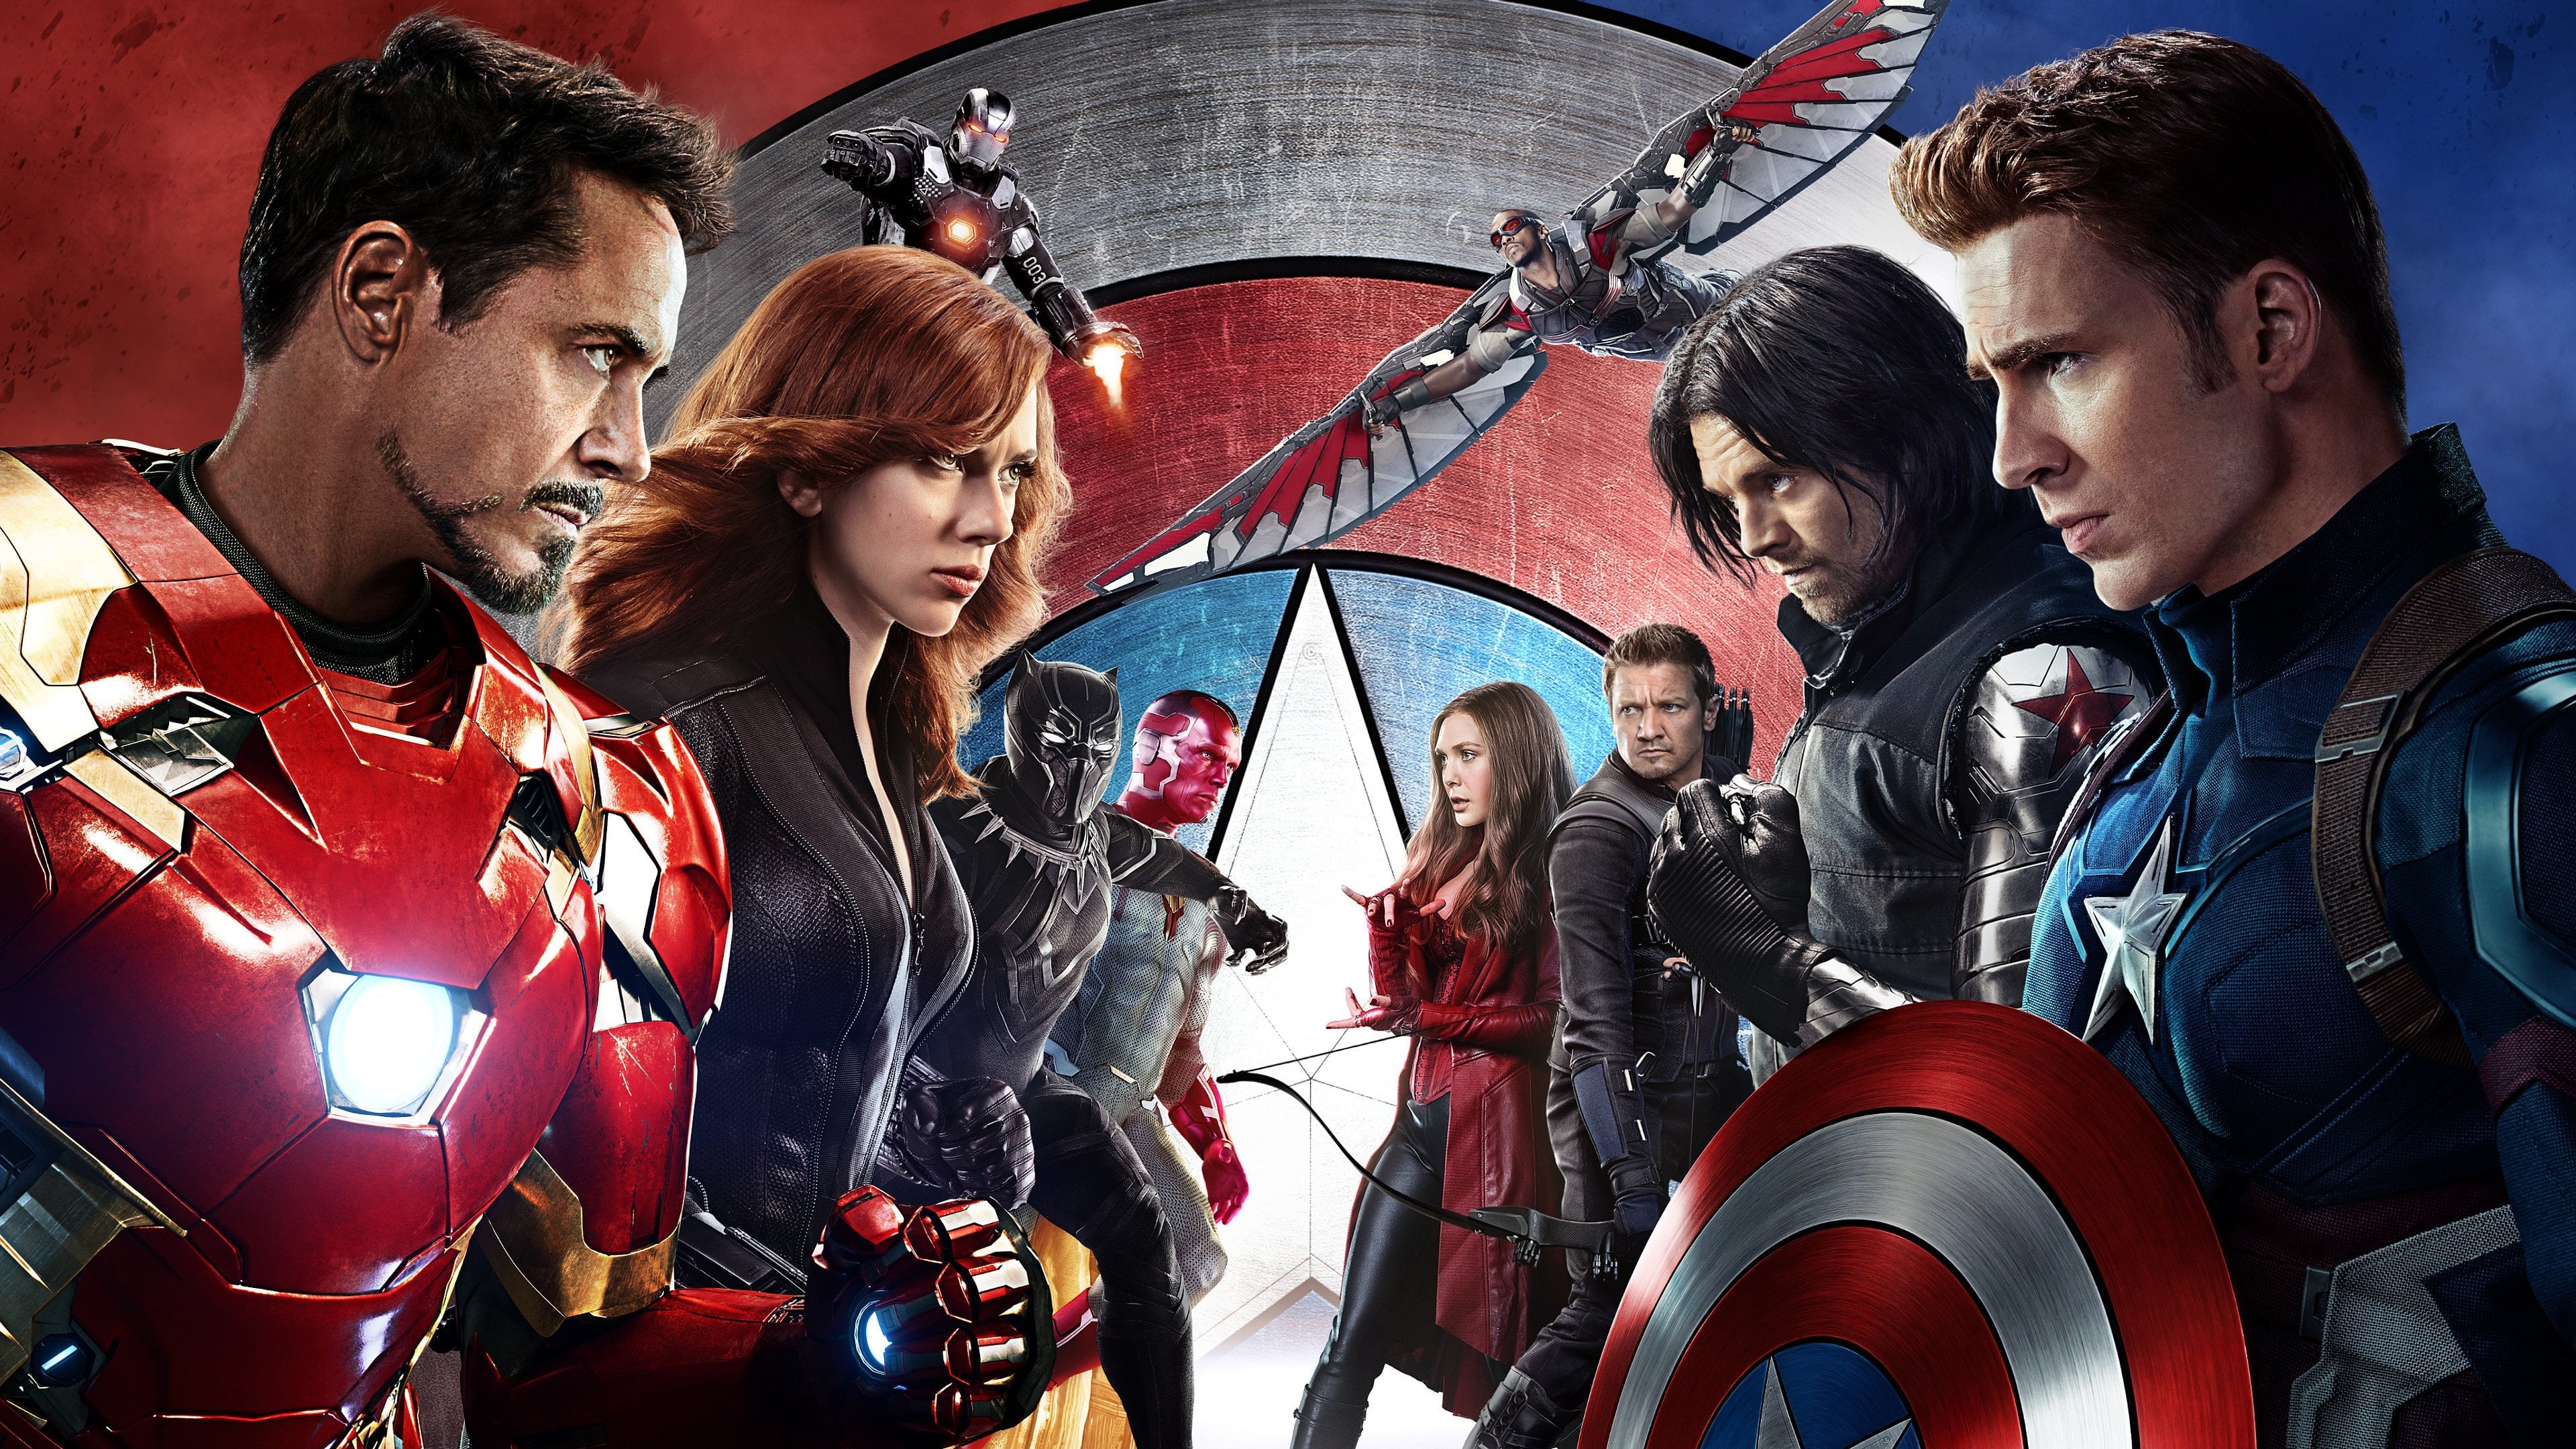 re-pelis.com - Capitán América: Civil War